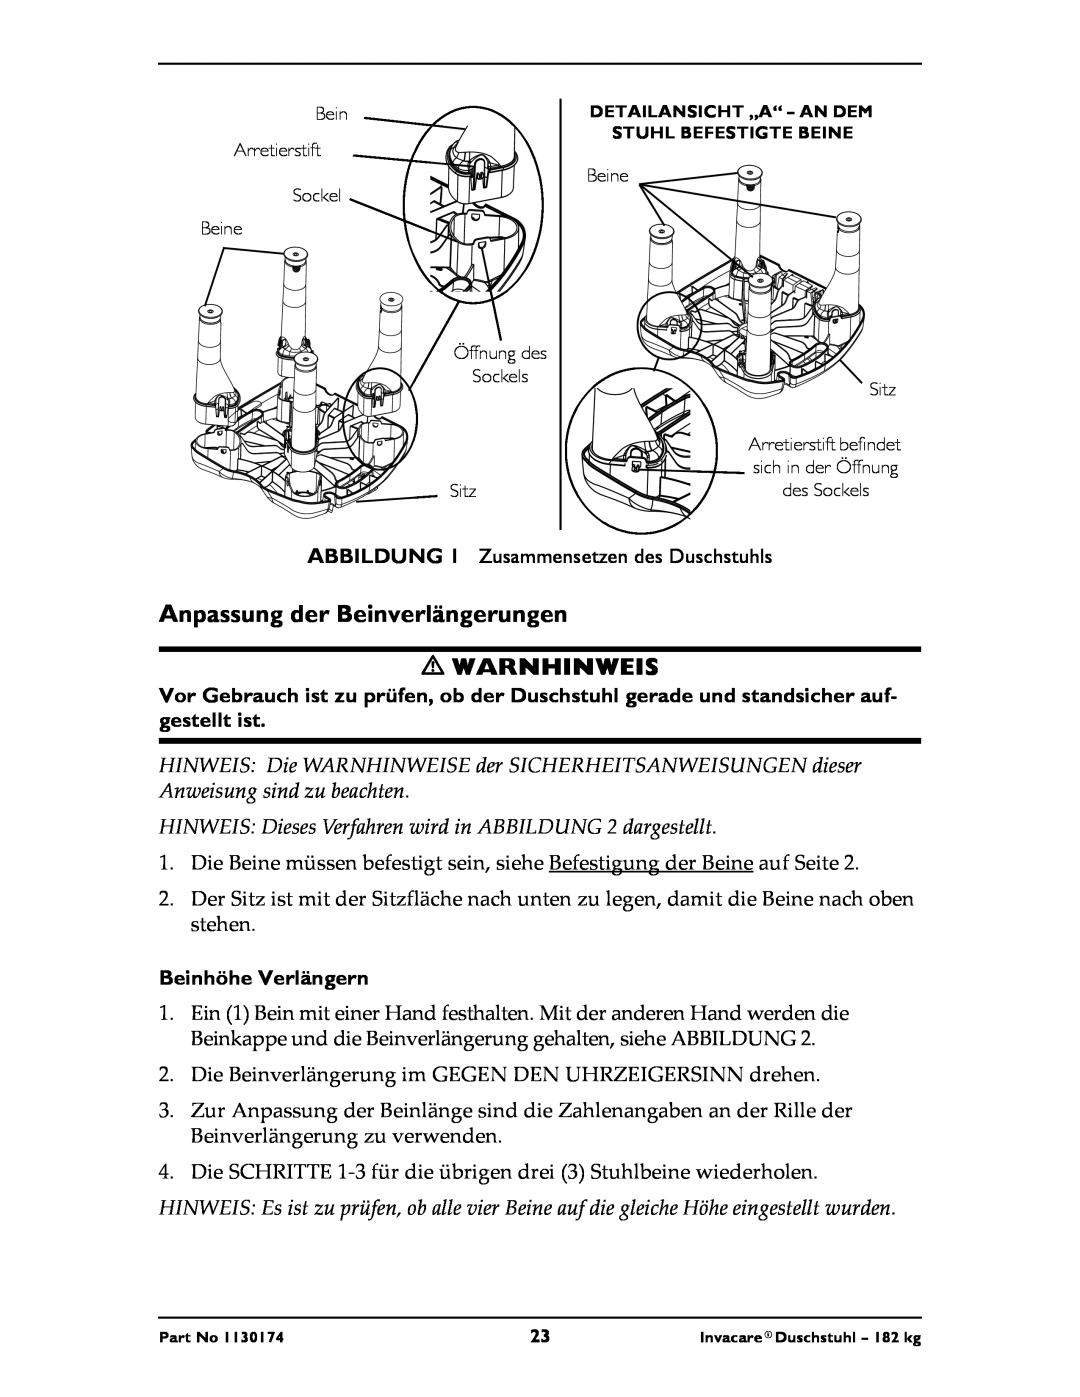 Invacare 9781E, 9780E instruction sheet Anpassung der Beinverlängerungen WARNHINWEIS, Beinhöhe Verlängern 